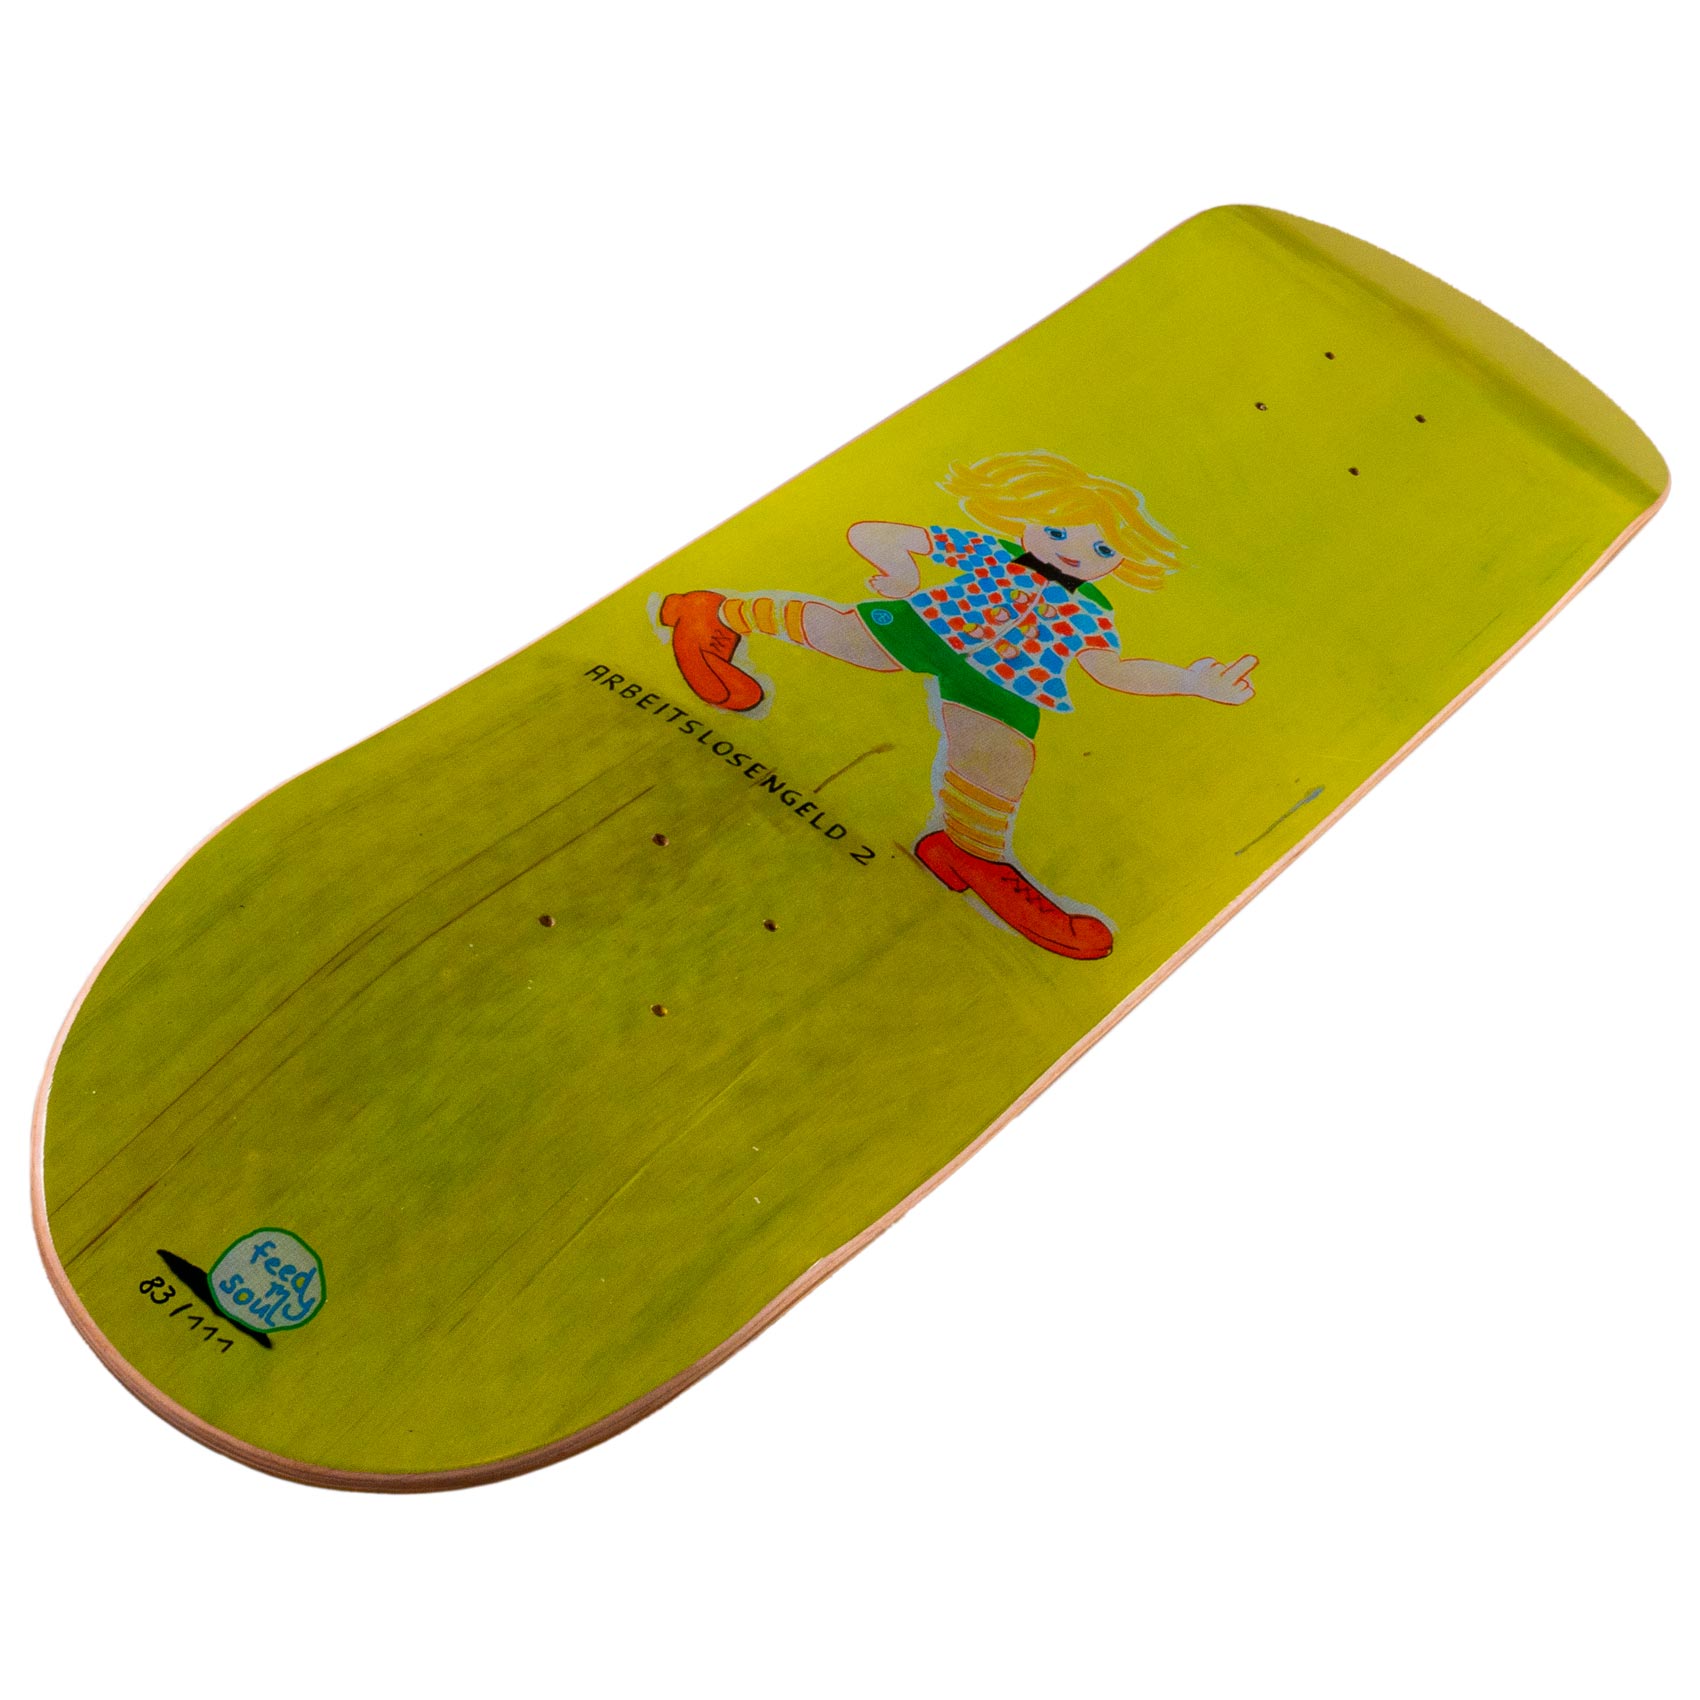 feedmysoul x Ali Endrullat Skateboard Deck ALG 2 8.125" (deep)